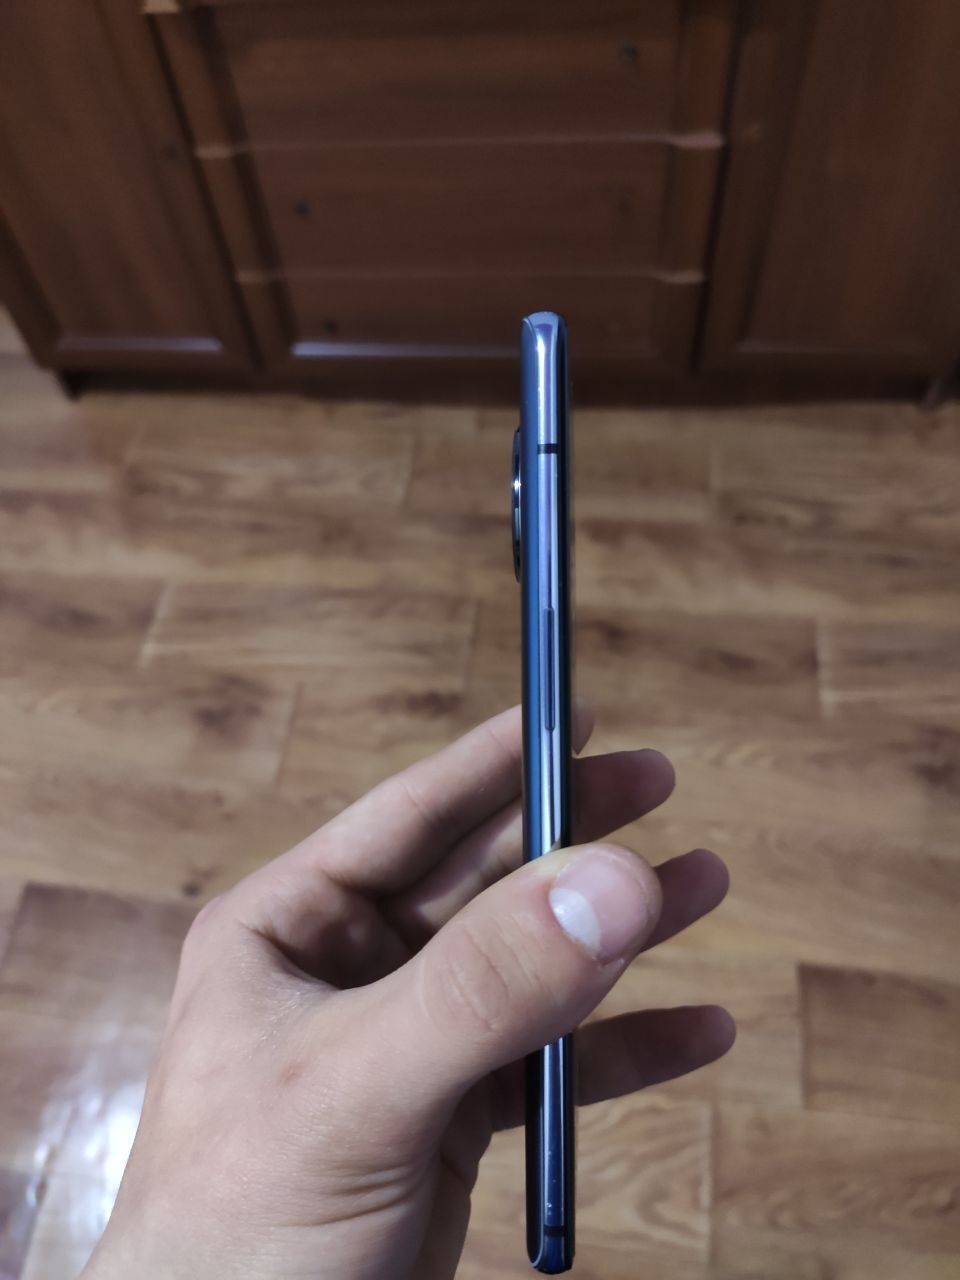 OnePlus 7T 8/128 срочно